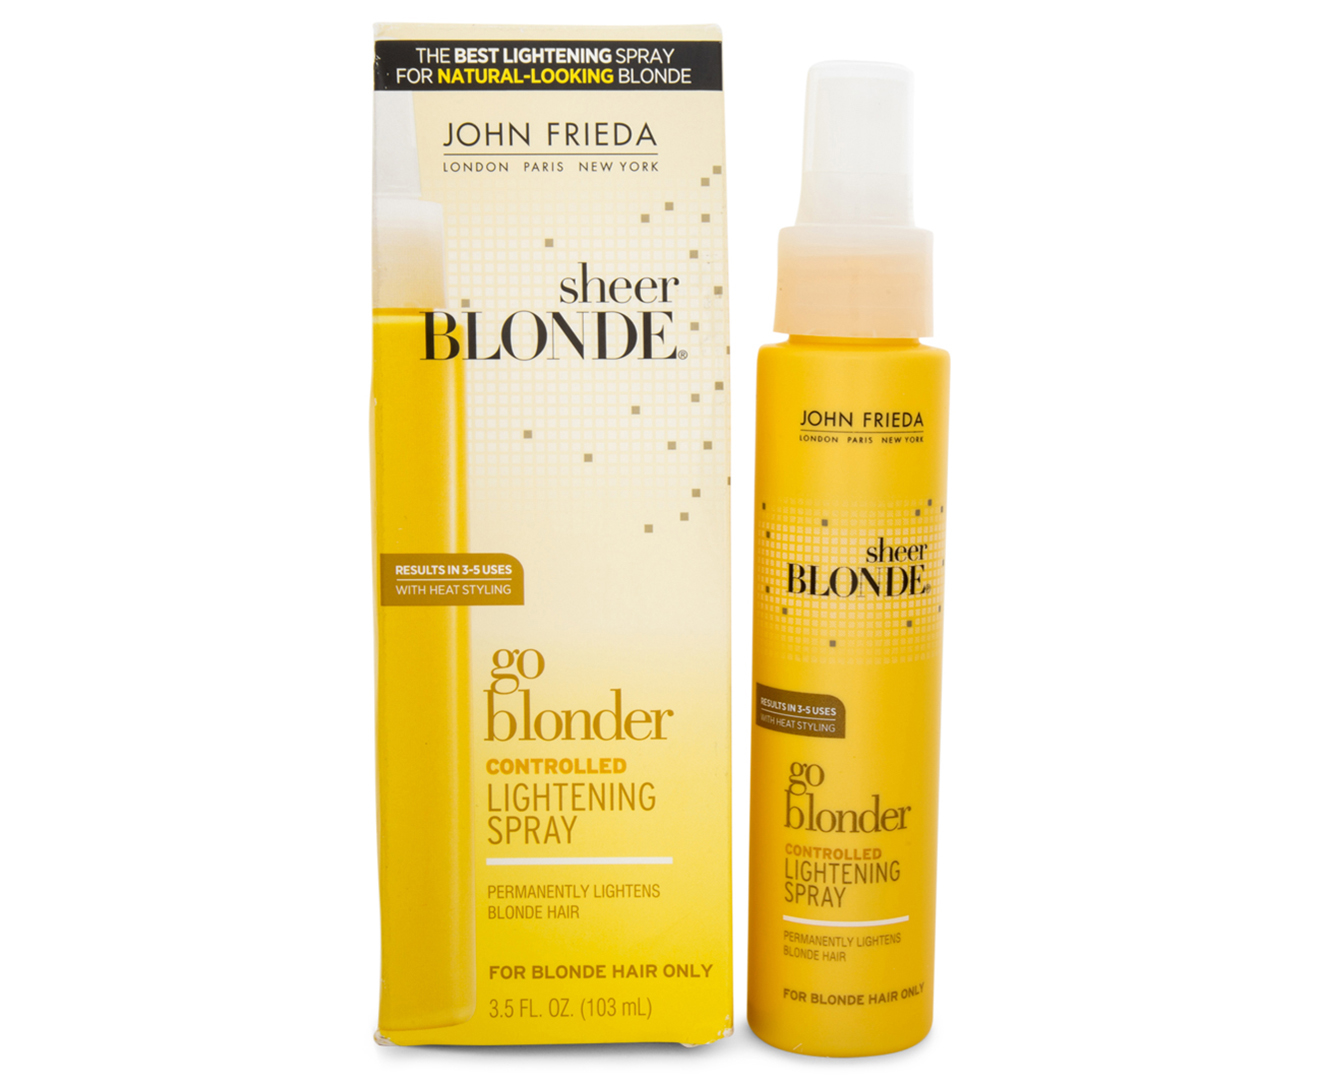 2. John Frieda Sheer Blonde Go Blonder Lightening Spray - wide 3